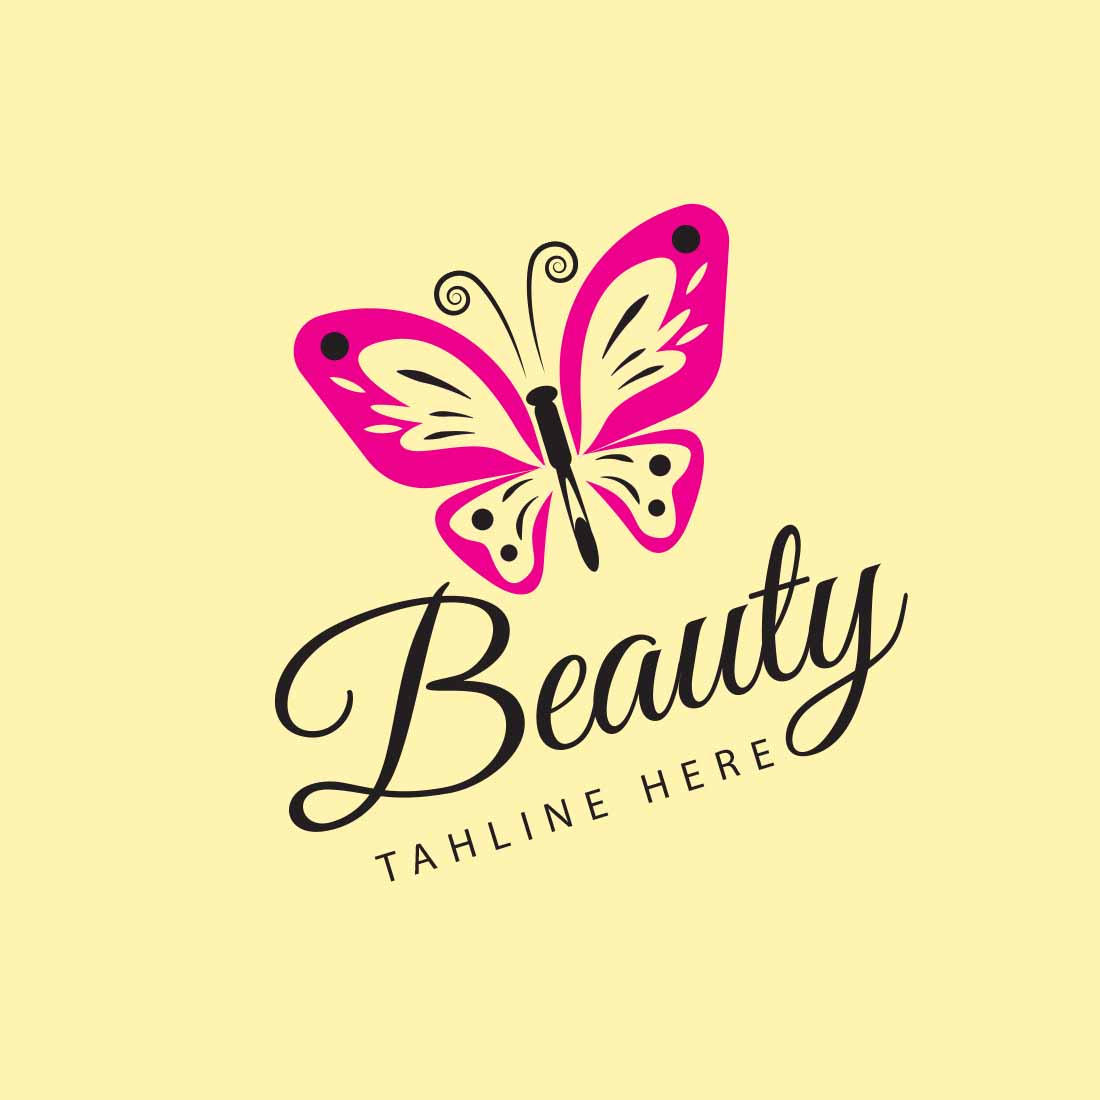 Creative Beauty Salon Logo Template cover image.